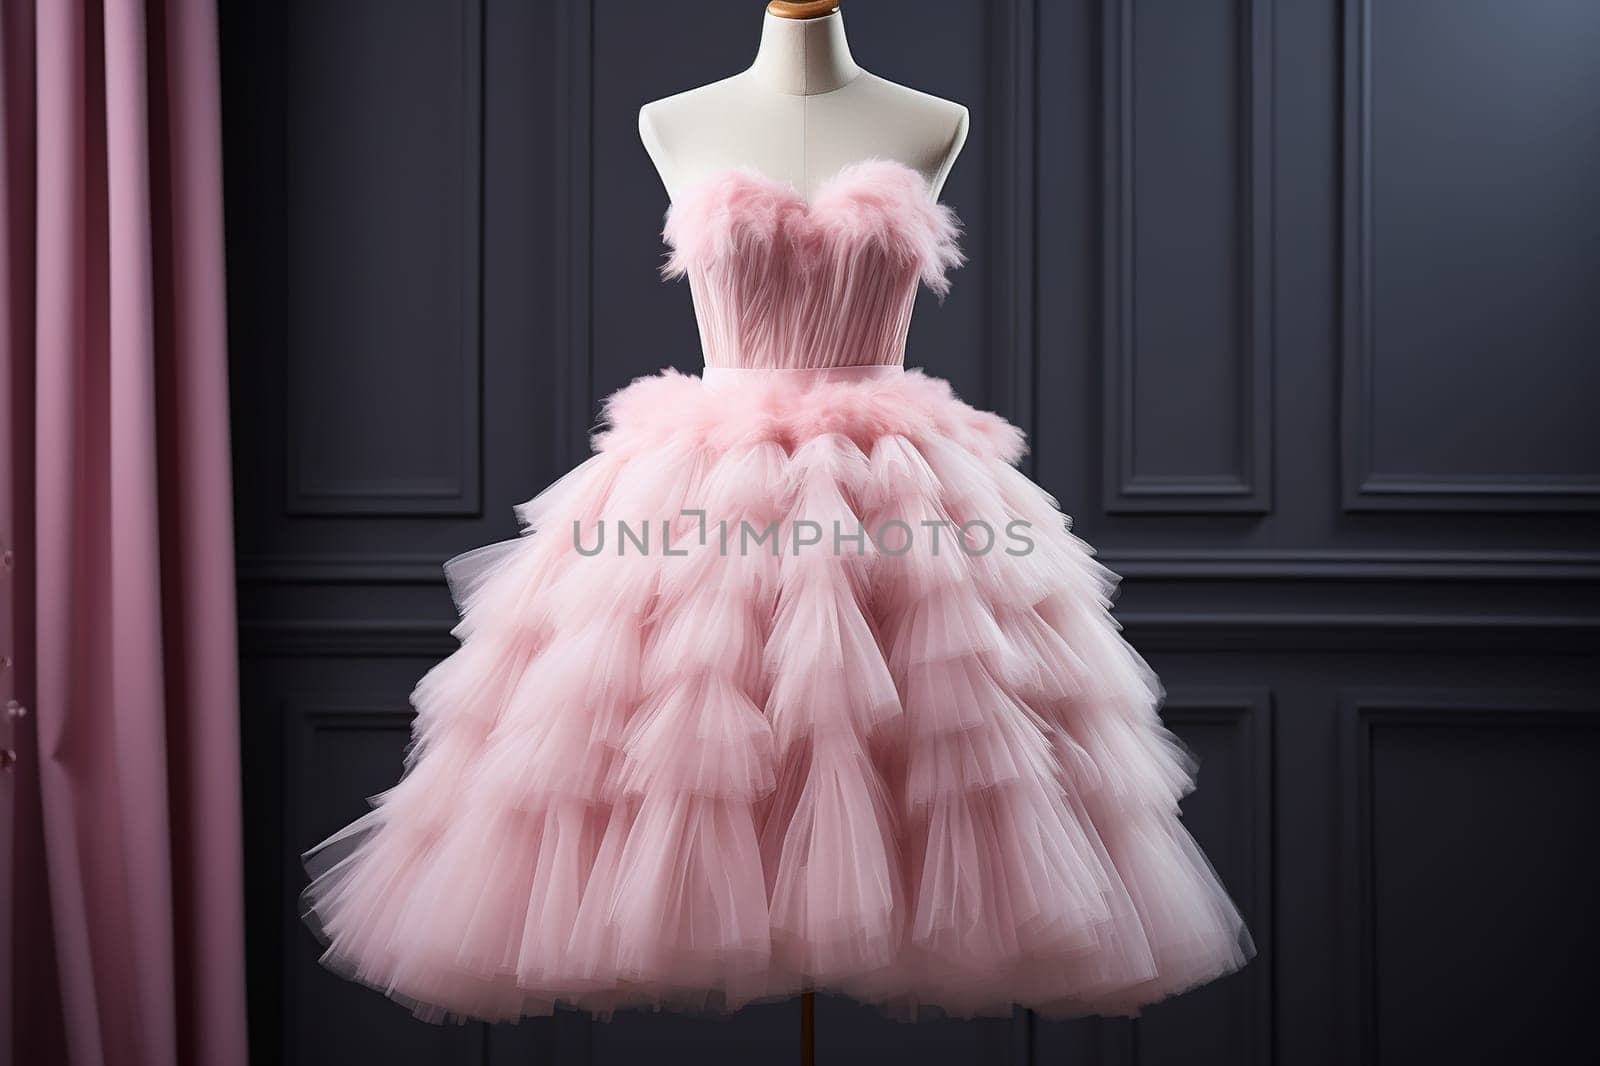 Elegant pink fluffy women's dress on a mannequin.